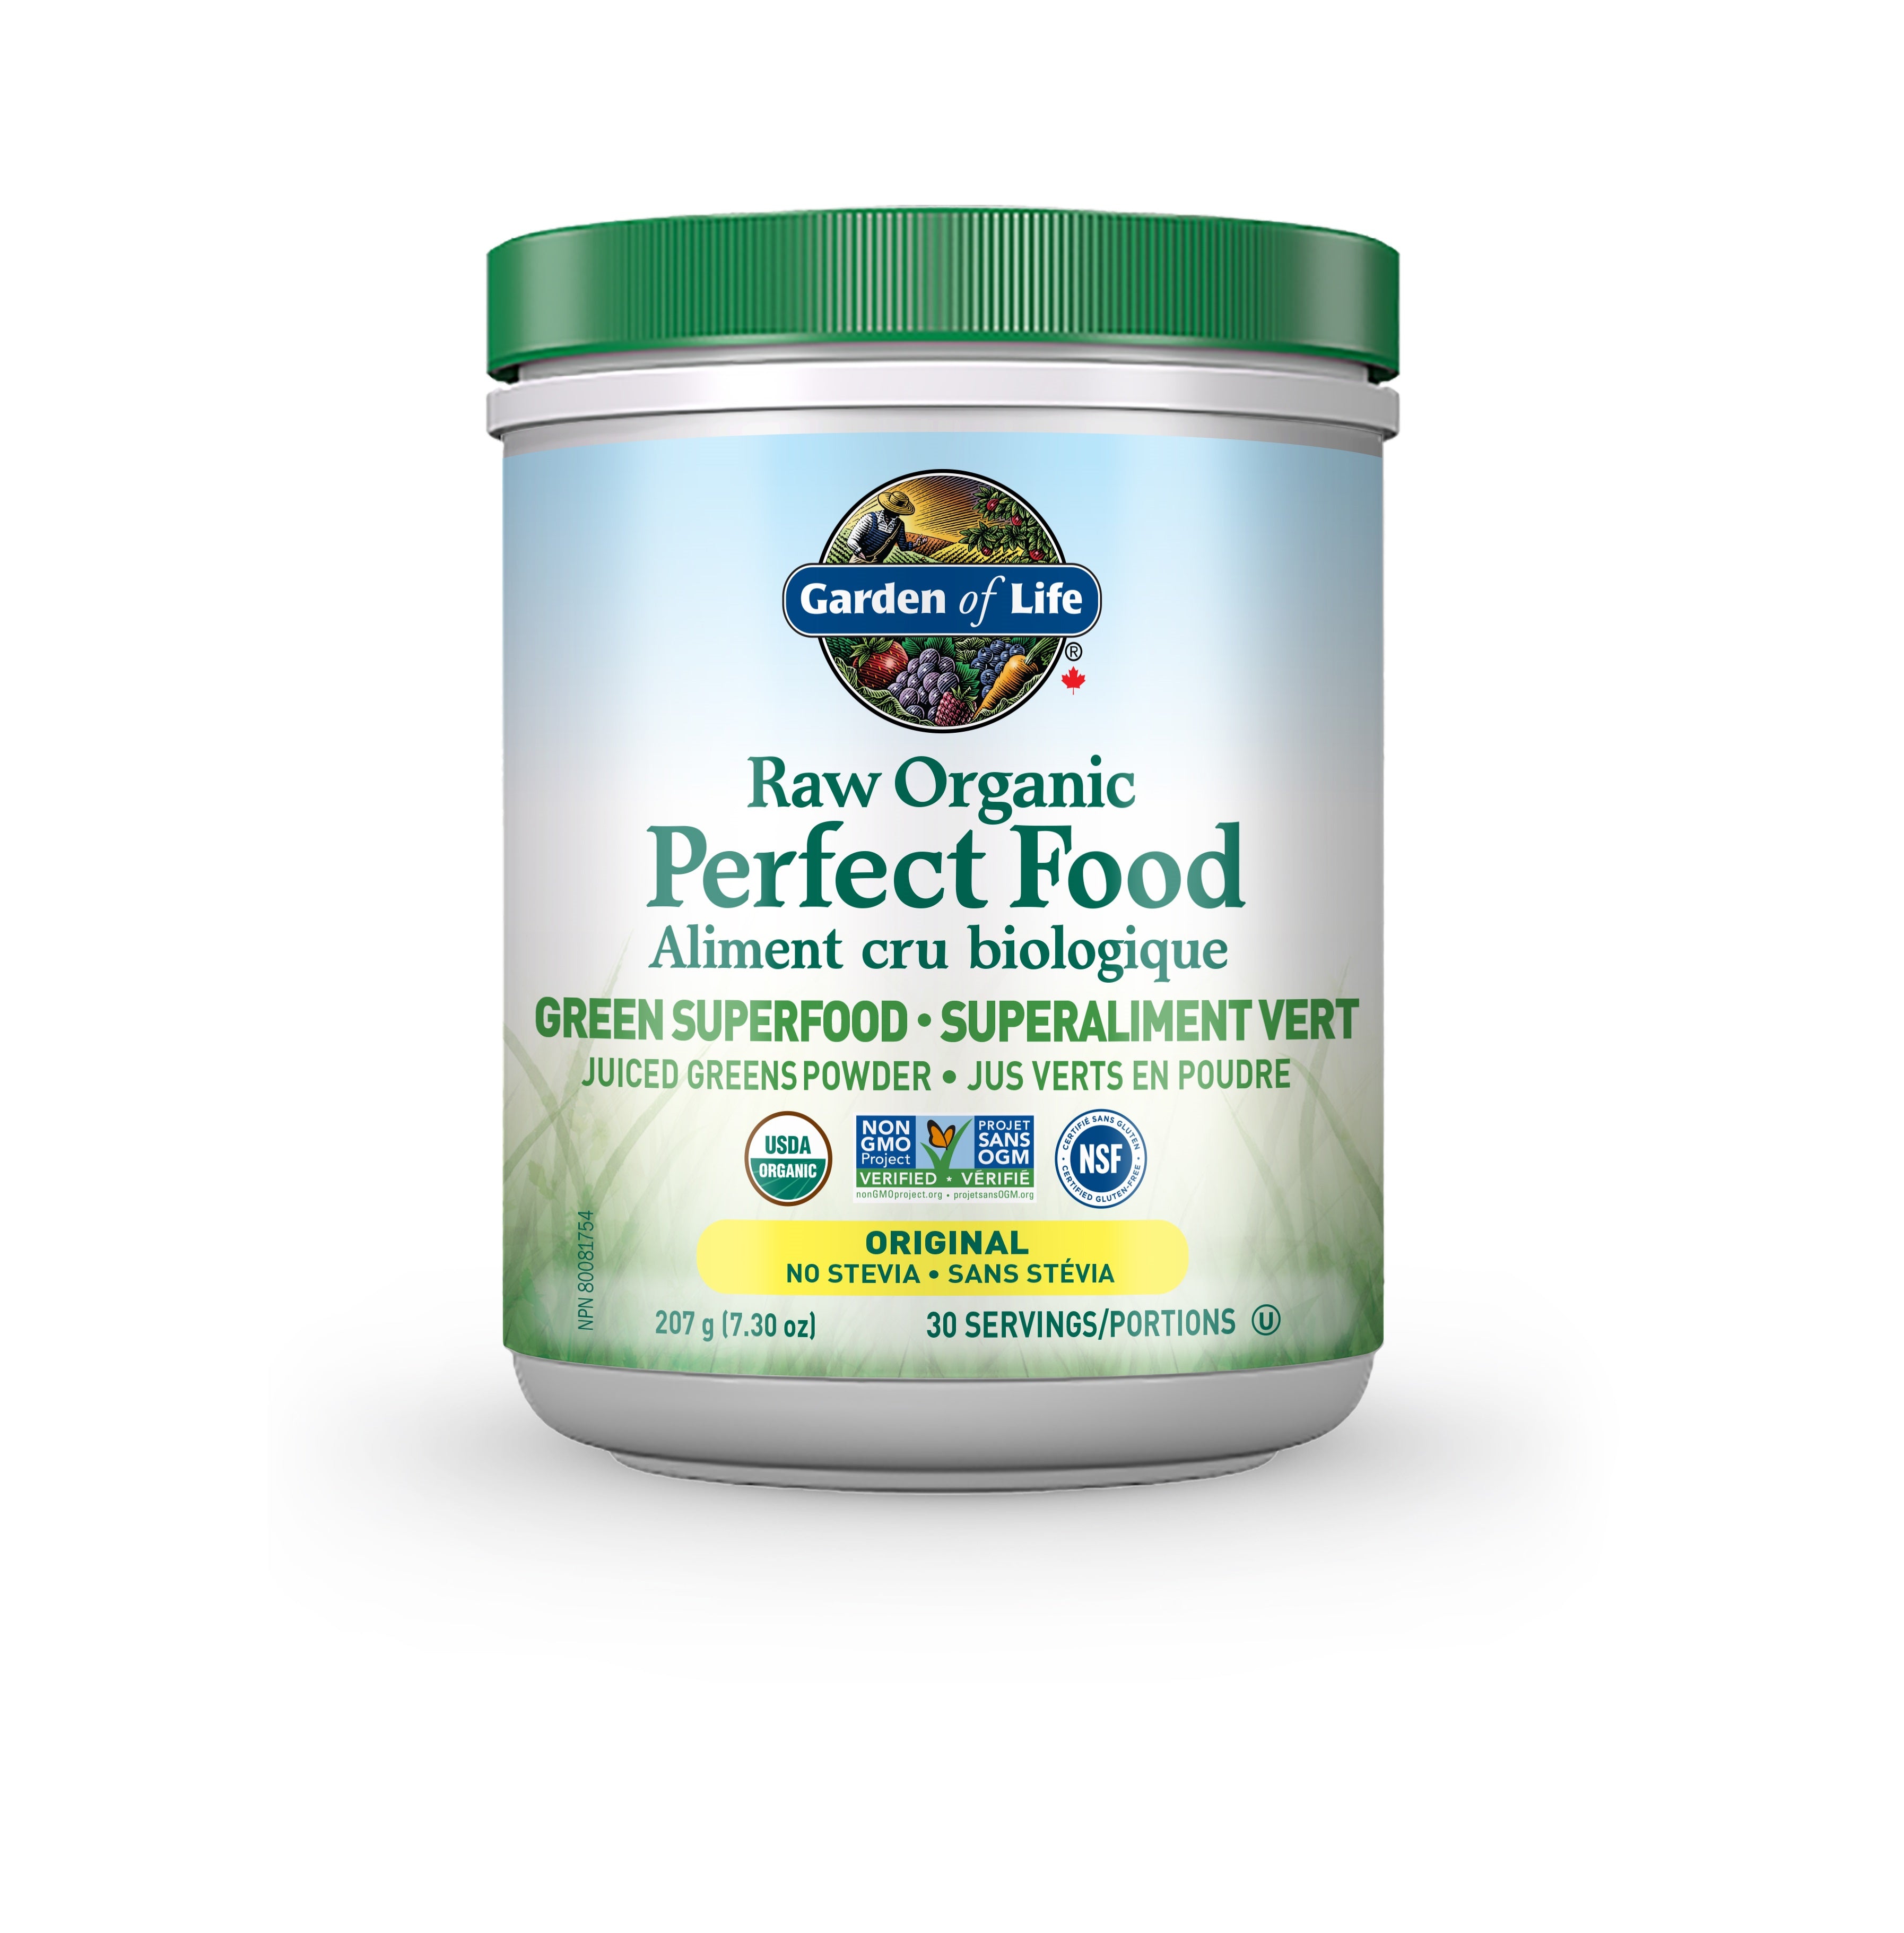 Garden of Life Raw Organic Perfect Food - Original (207g) - Lifestyle Markets